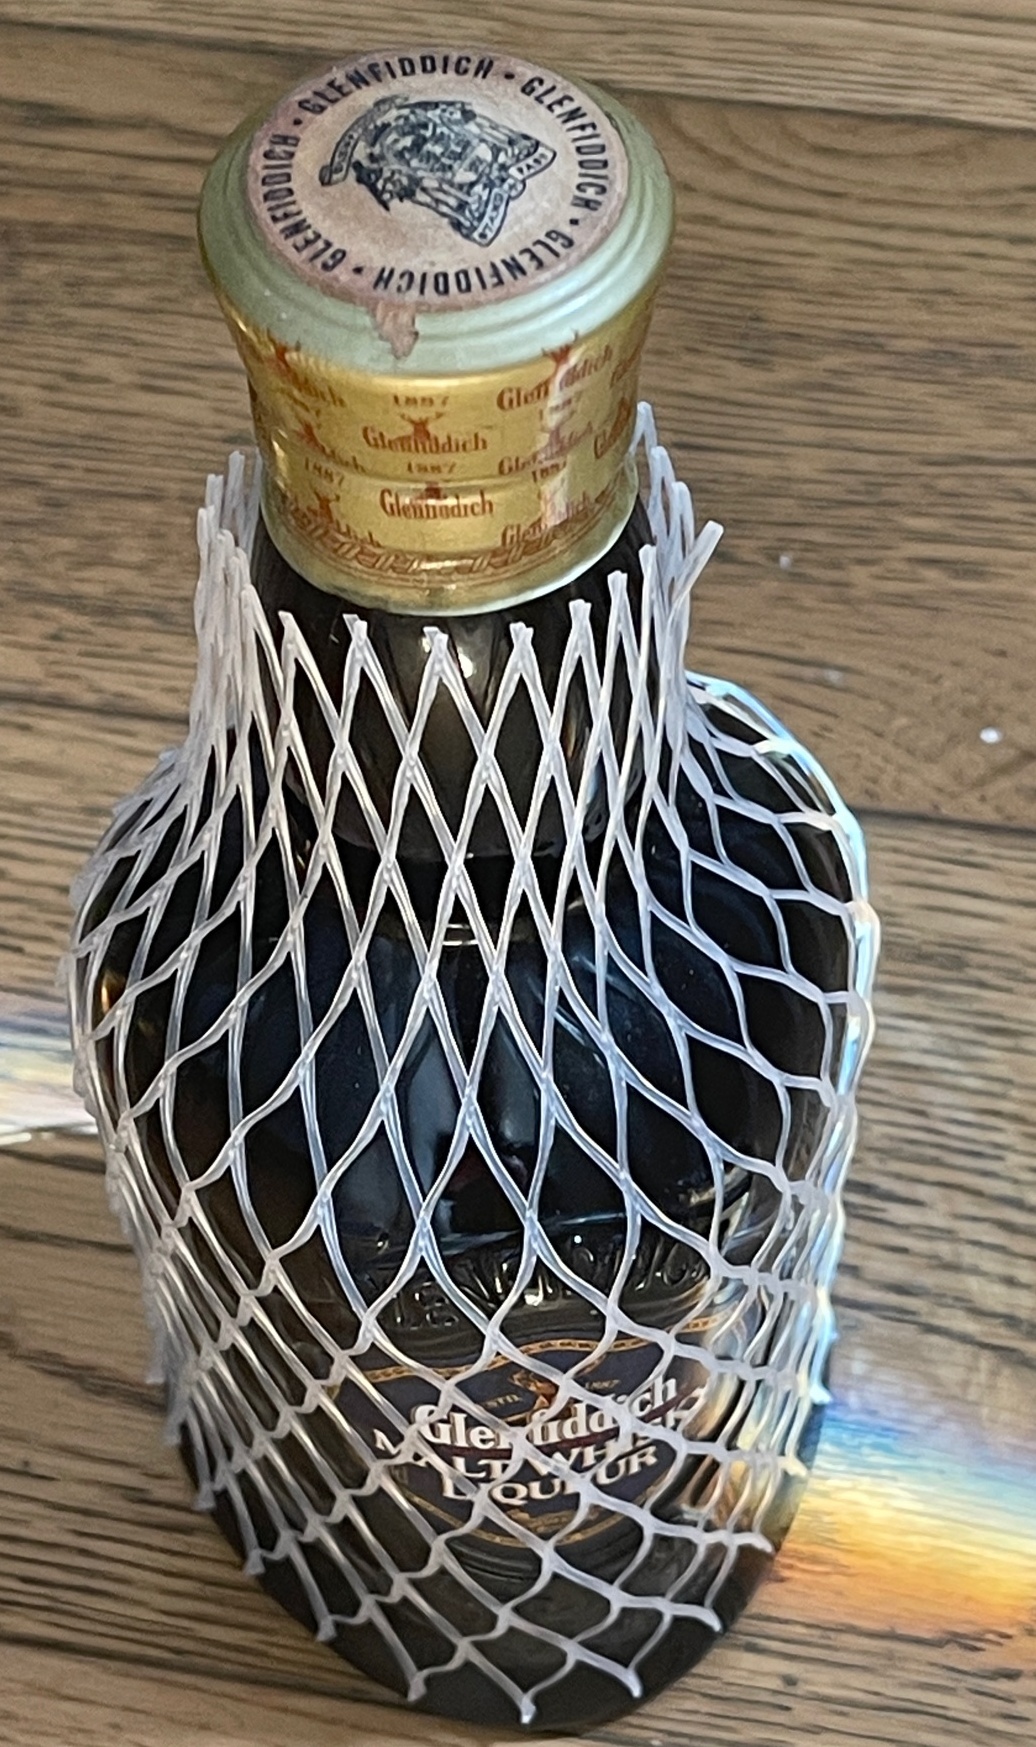 Bottle of Glenfiddich Malt Whisky Liquer - Bottle 1 of 5. - Image 5 of 5